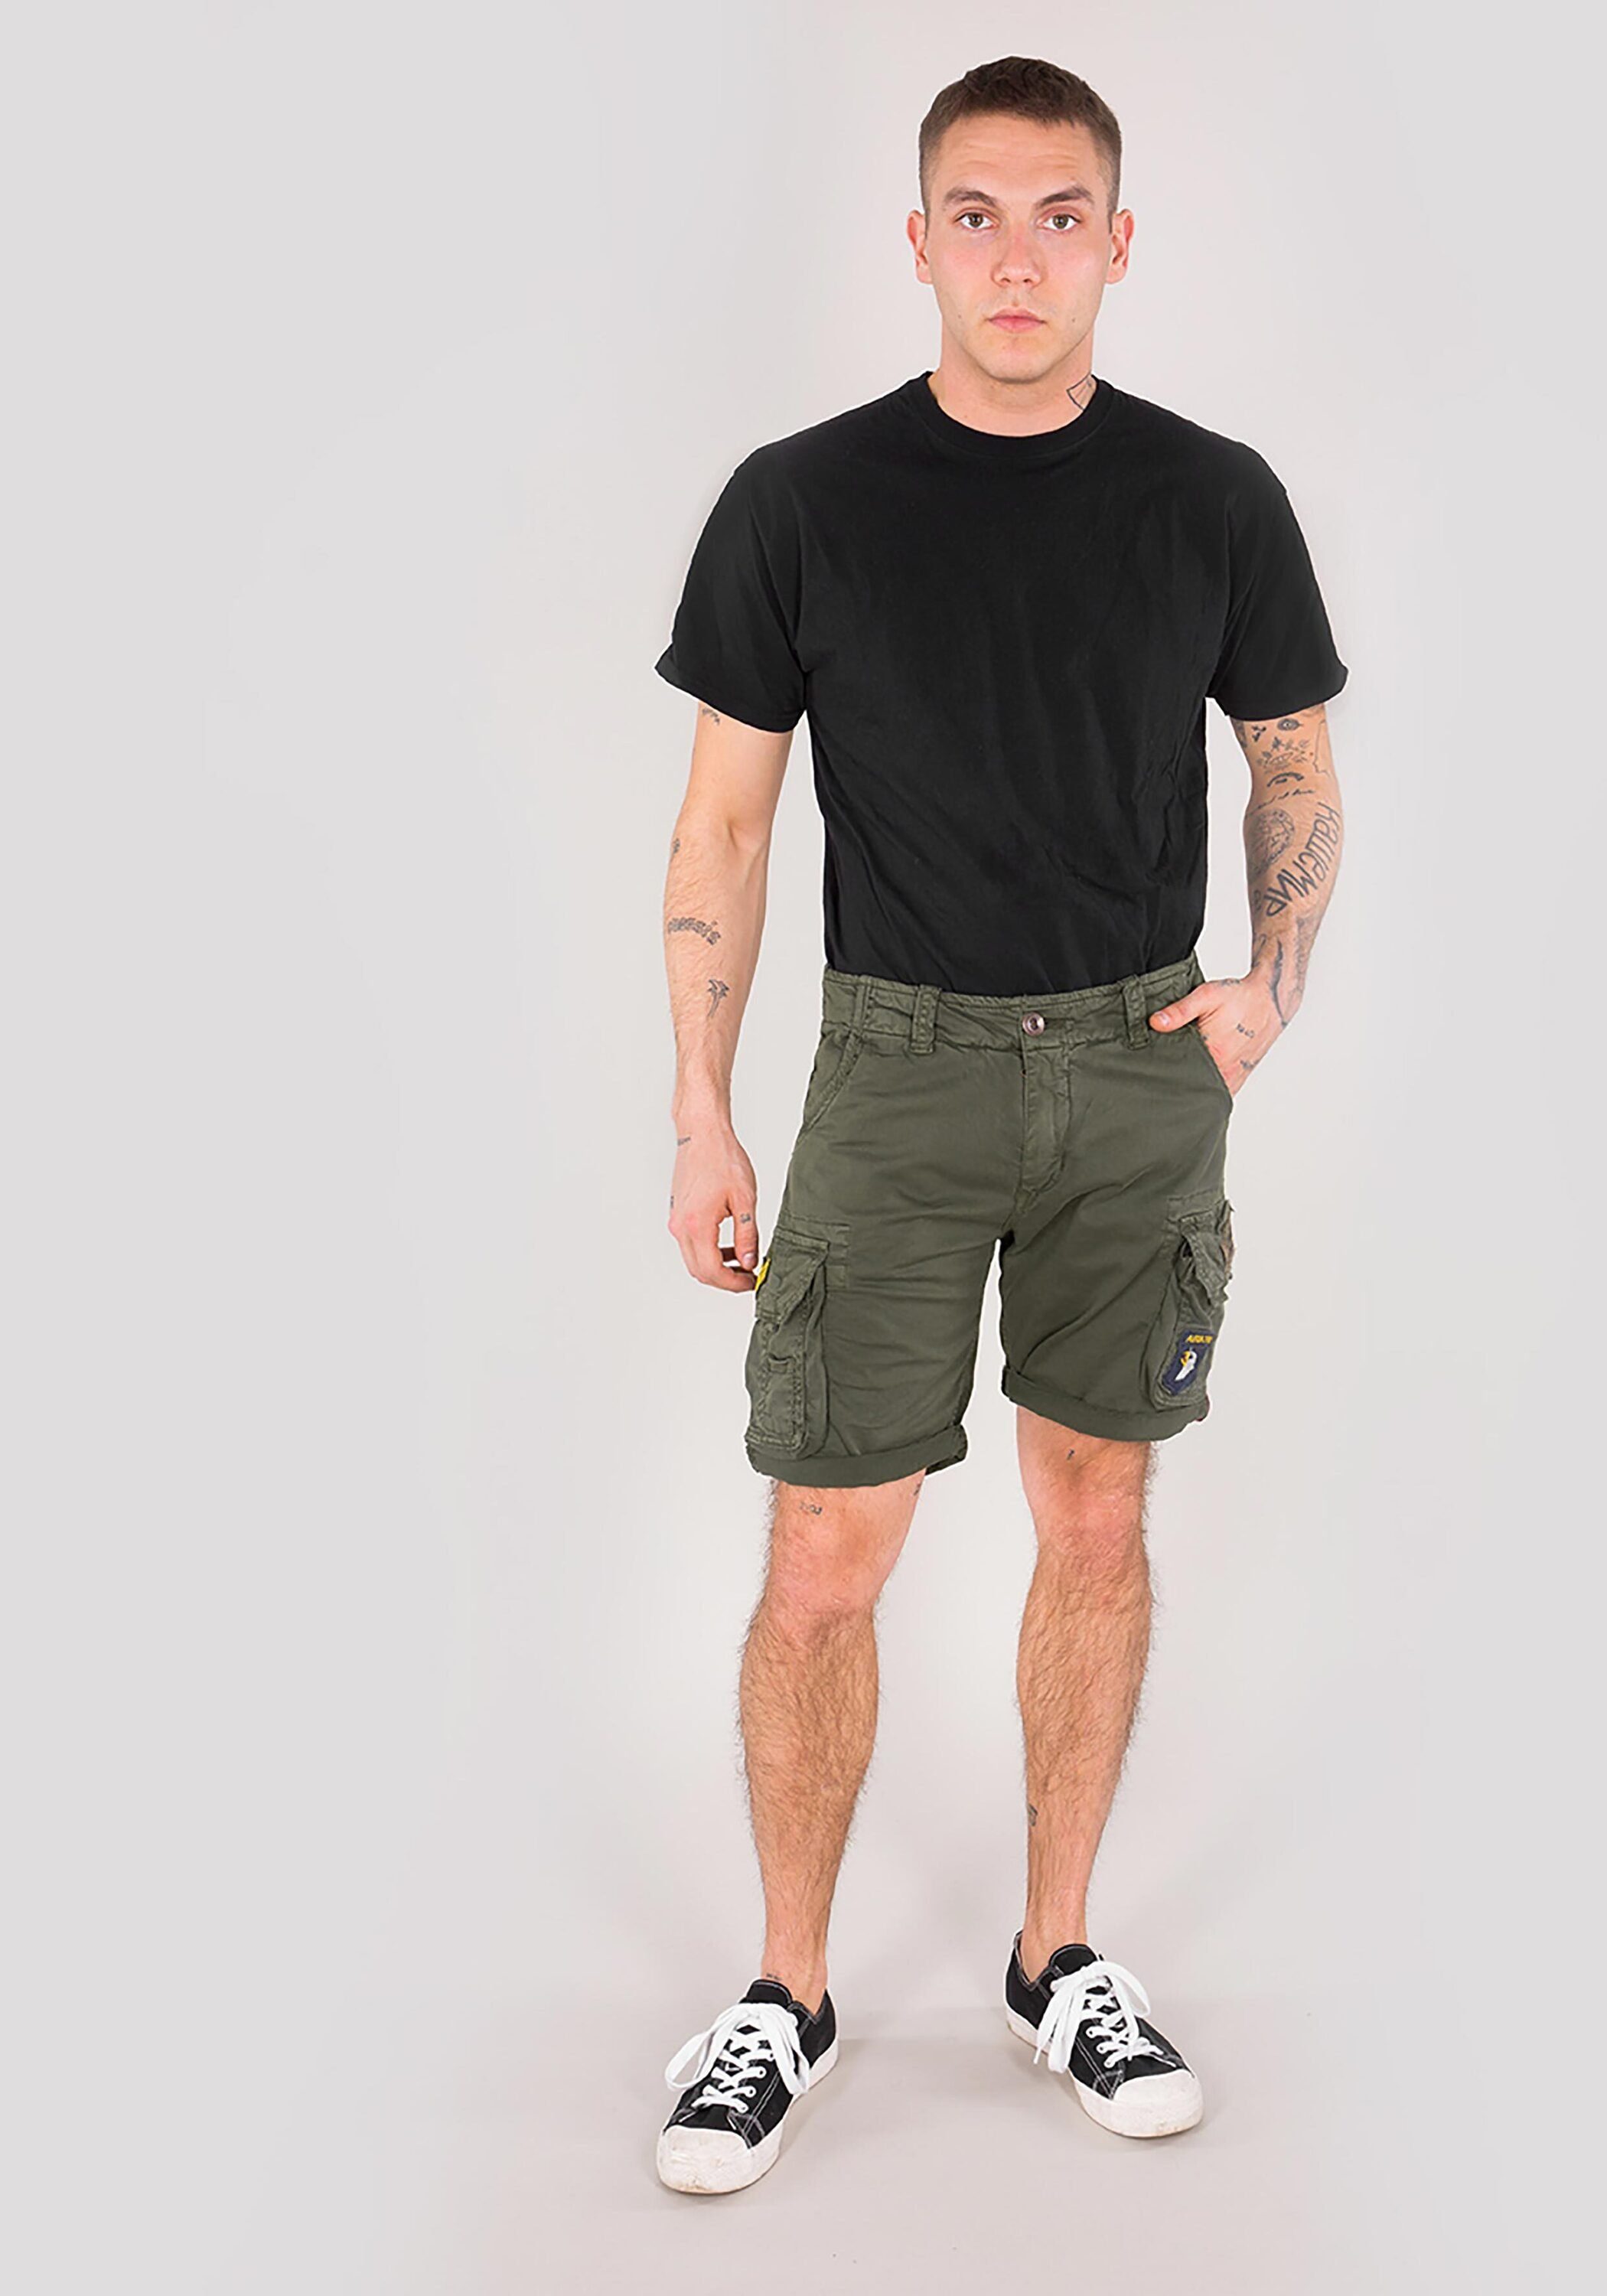 olive Shorts Alpha - Industries Alpha Crew Short Shorts Men dark Patch Industries